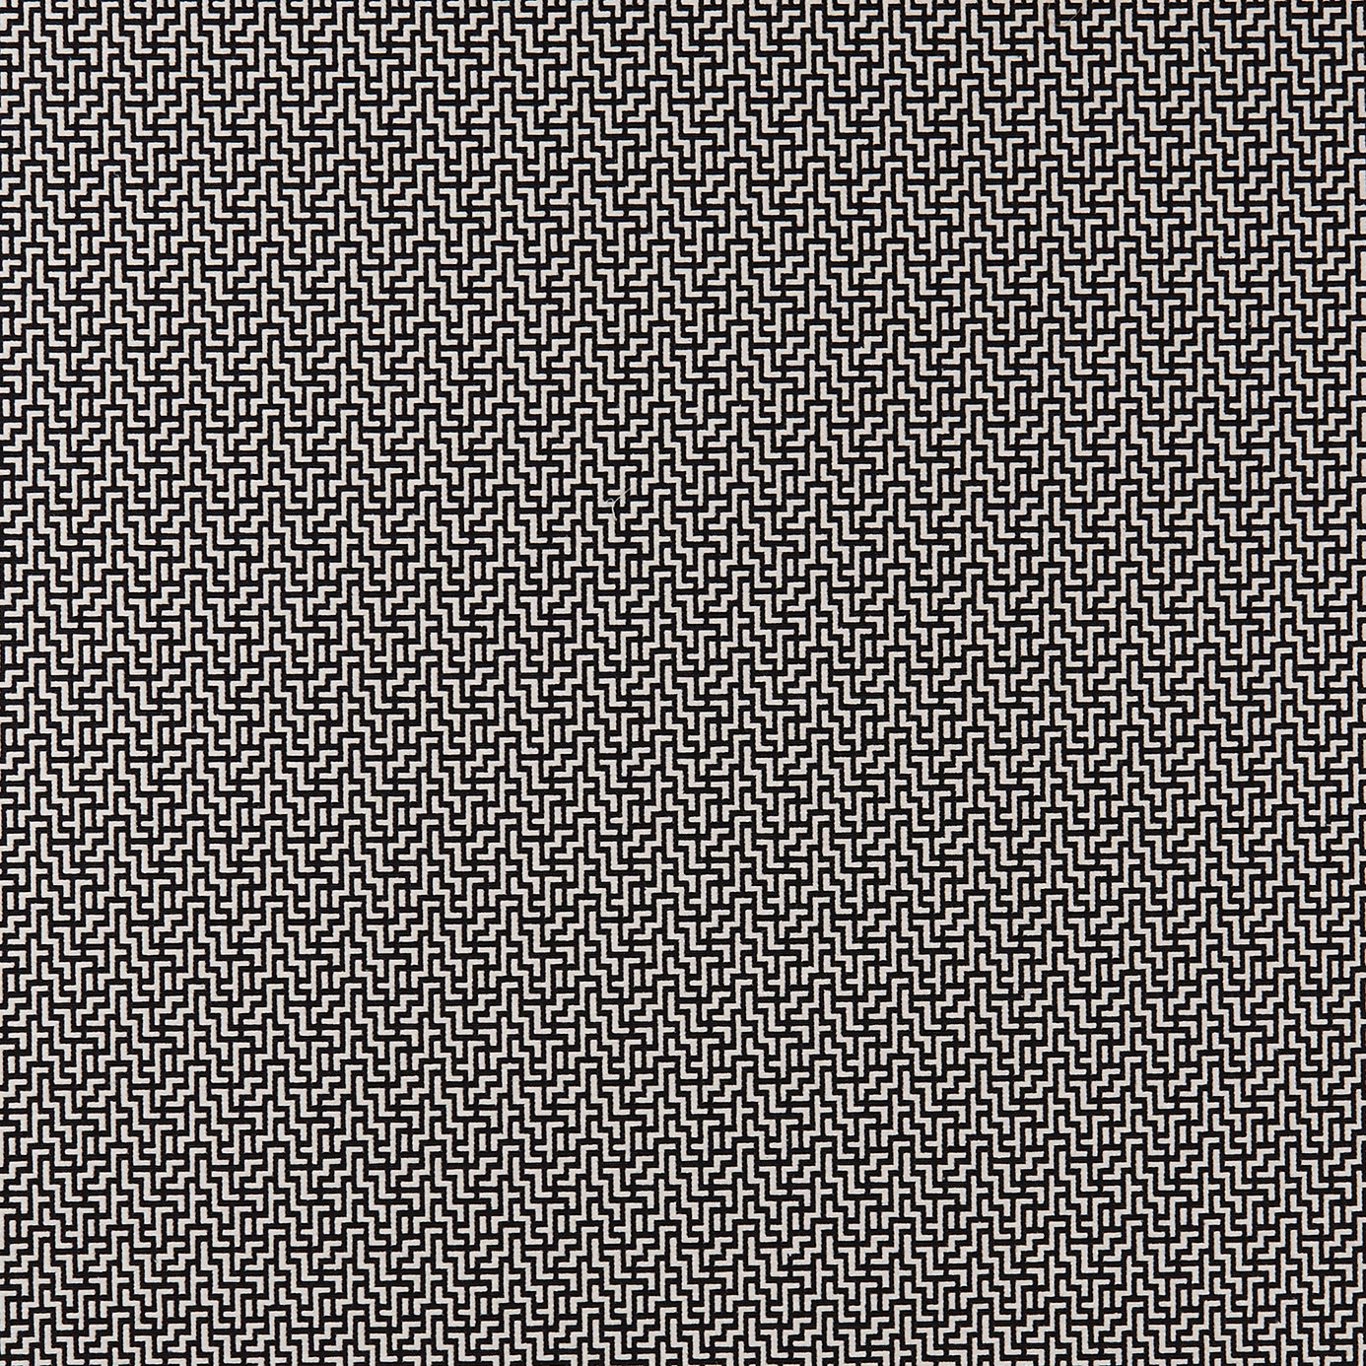 BW1030 Black/White Fabric by CNC